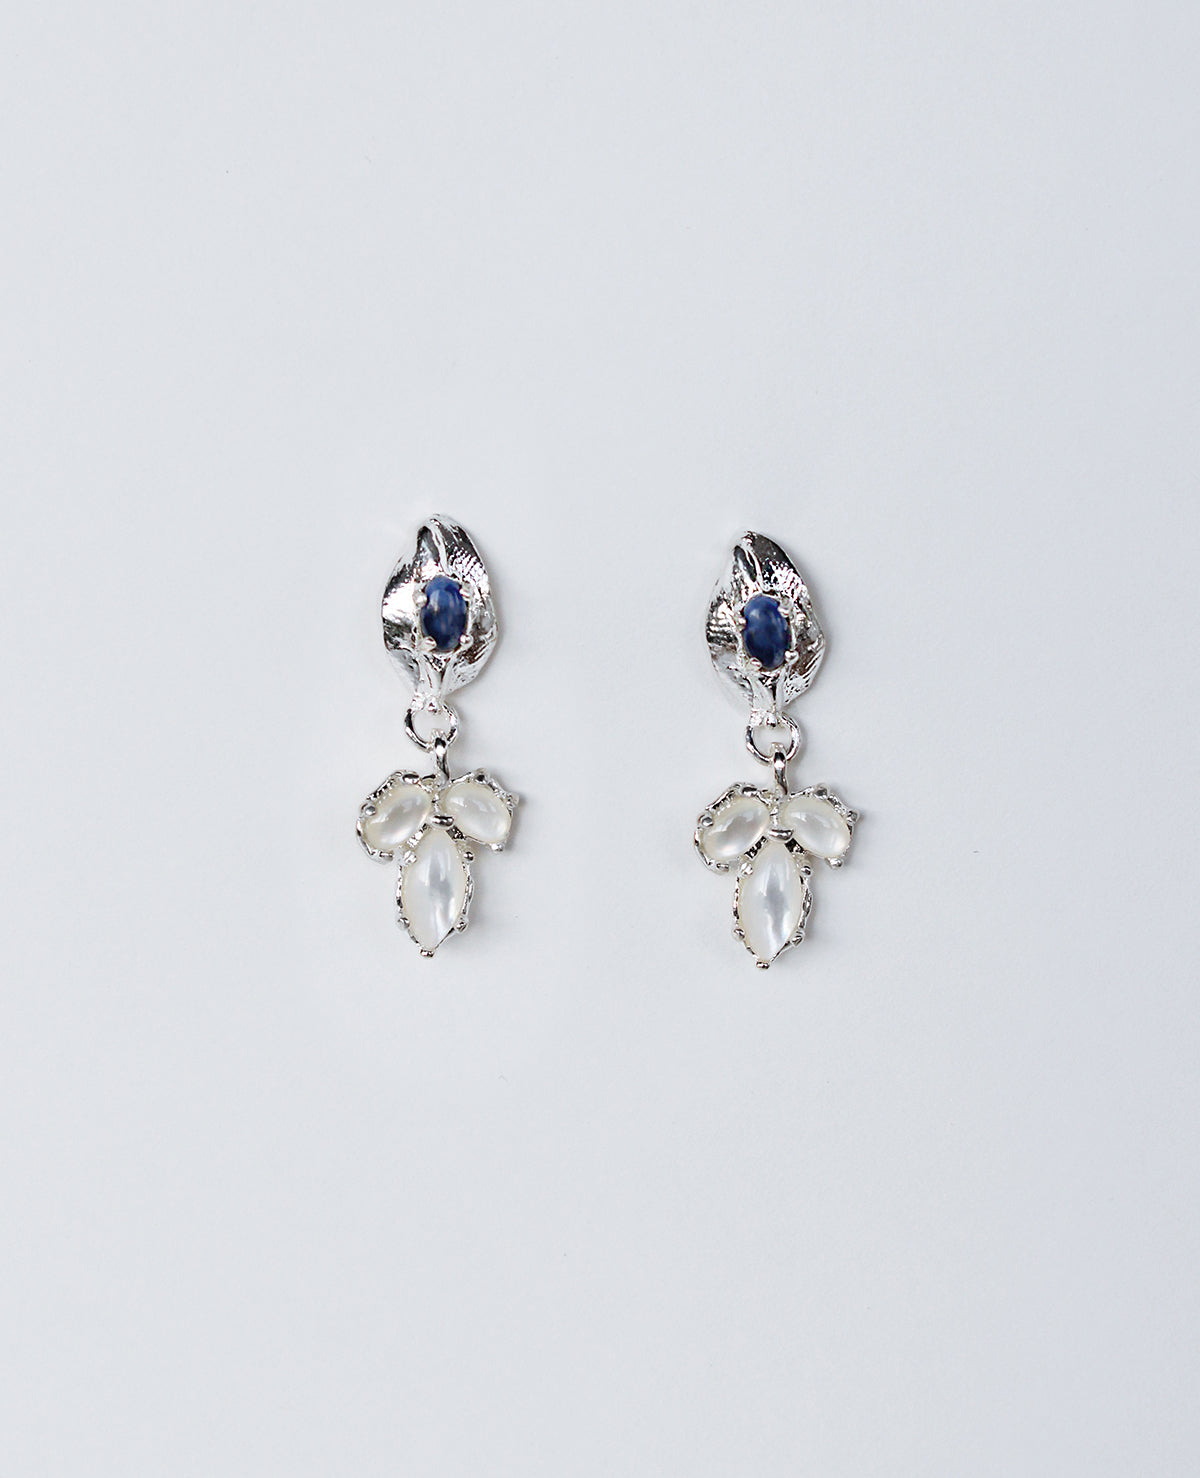 EAT MY BERRIES // winter earrings - ORA-C jewelry - handmade jewelry by Montreal based independent designer Caroline Pham